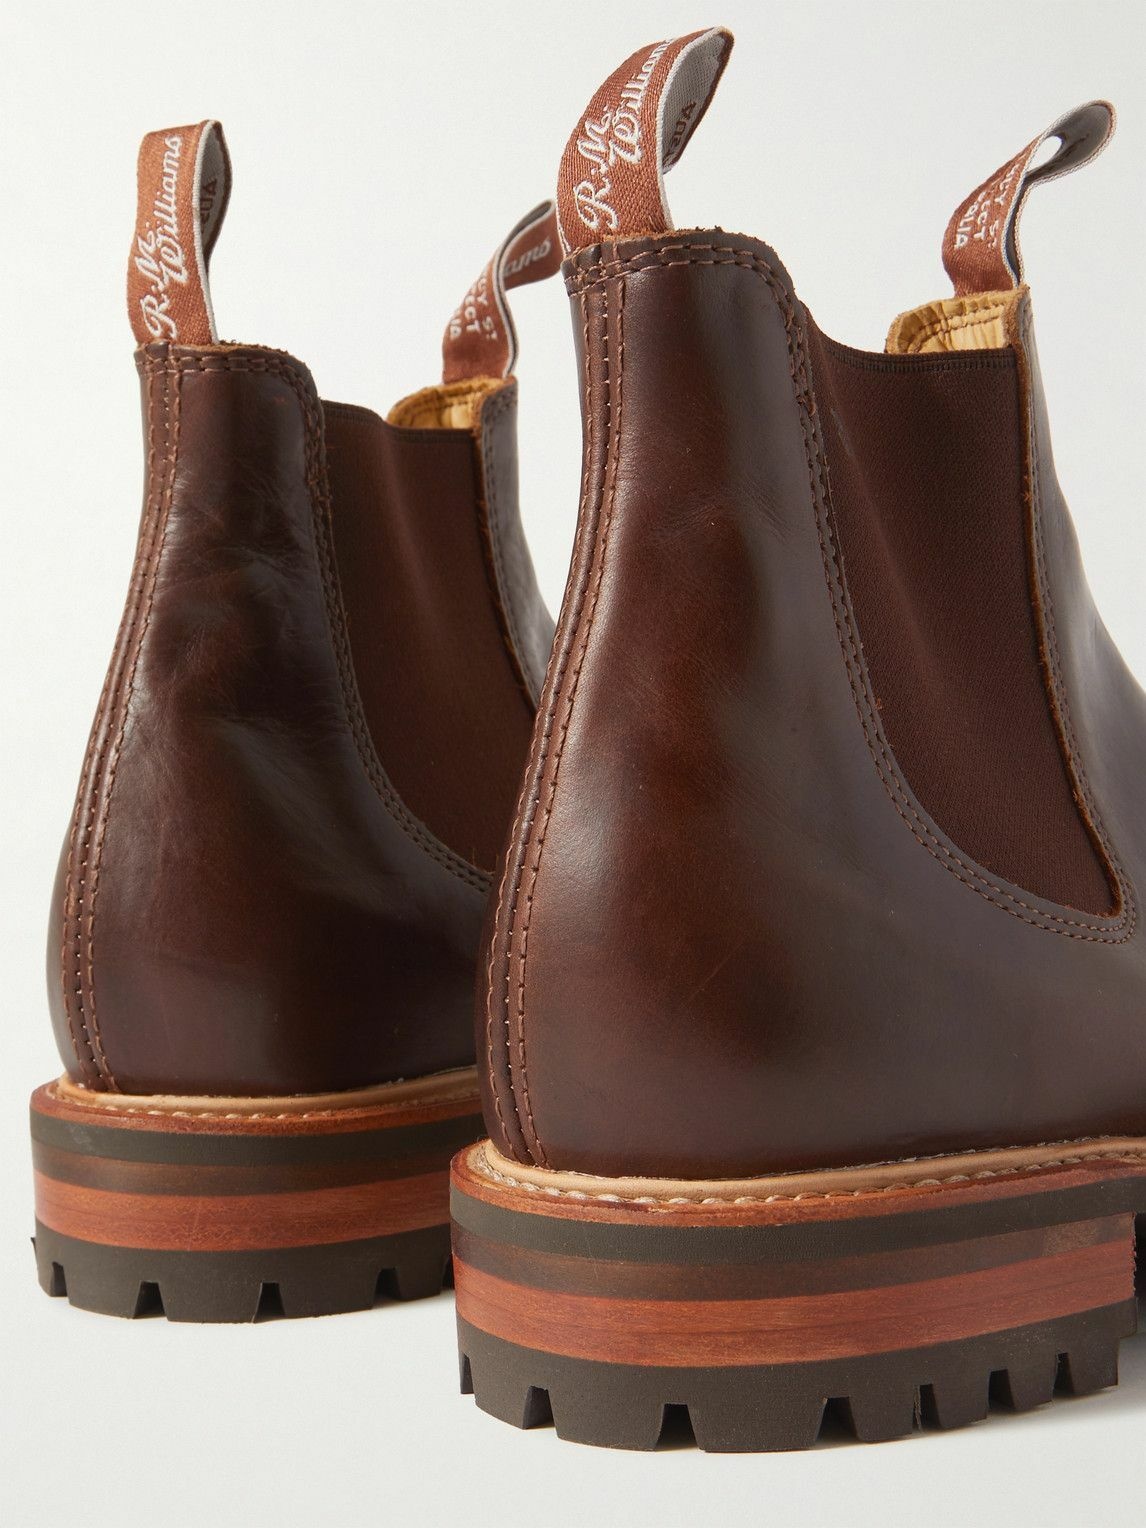 R.M.Williams - Gardener Commando Leather Chelsea Boots - Brown